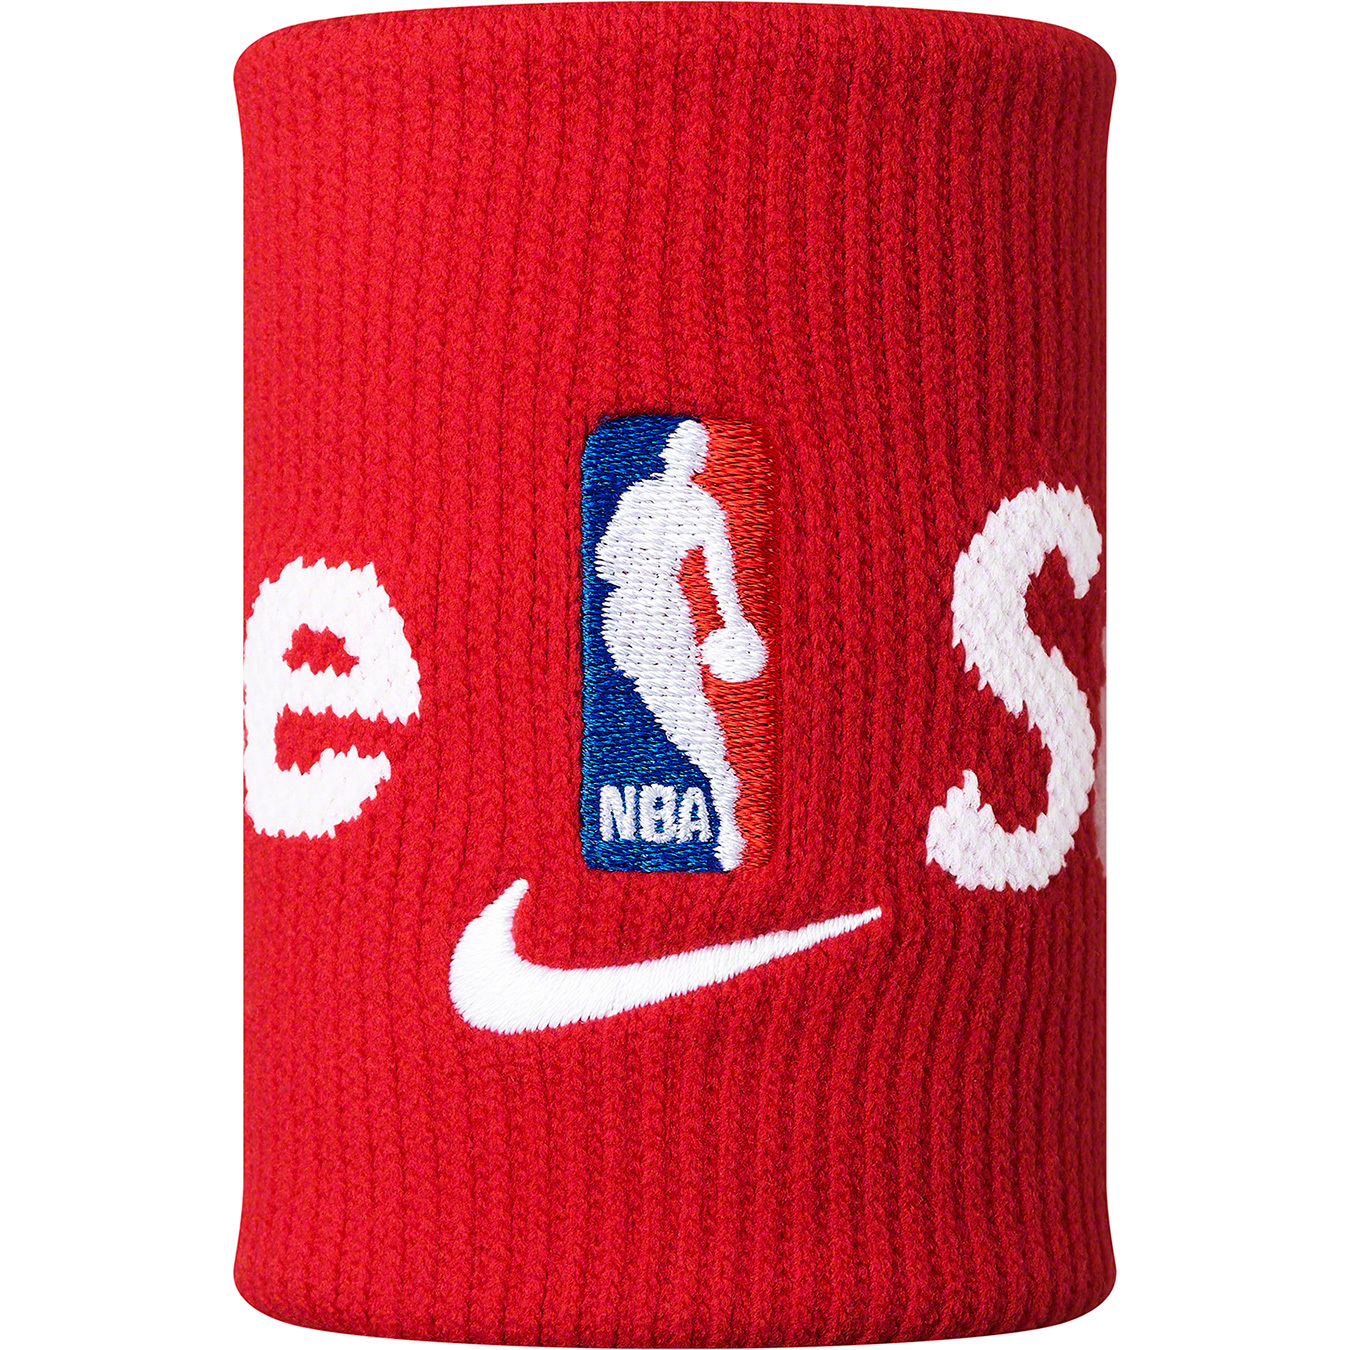 Supreme®/Nike®/NBA Wristbands Red